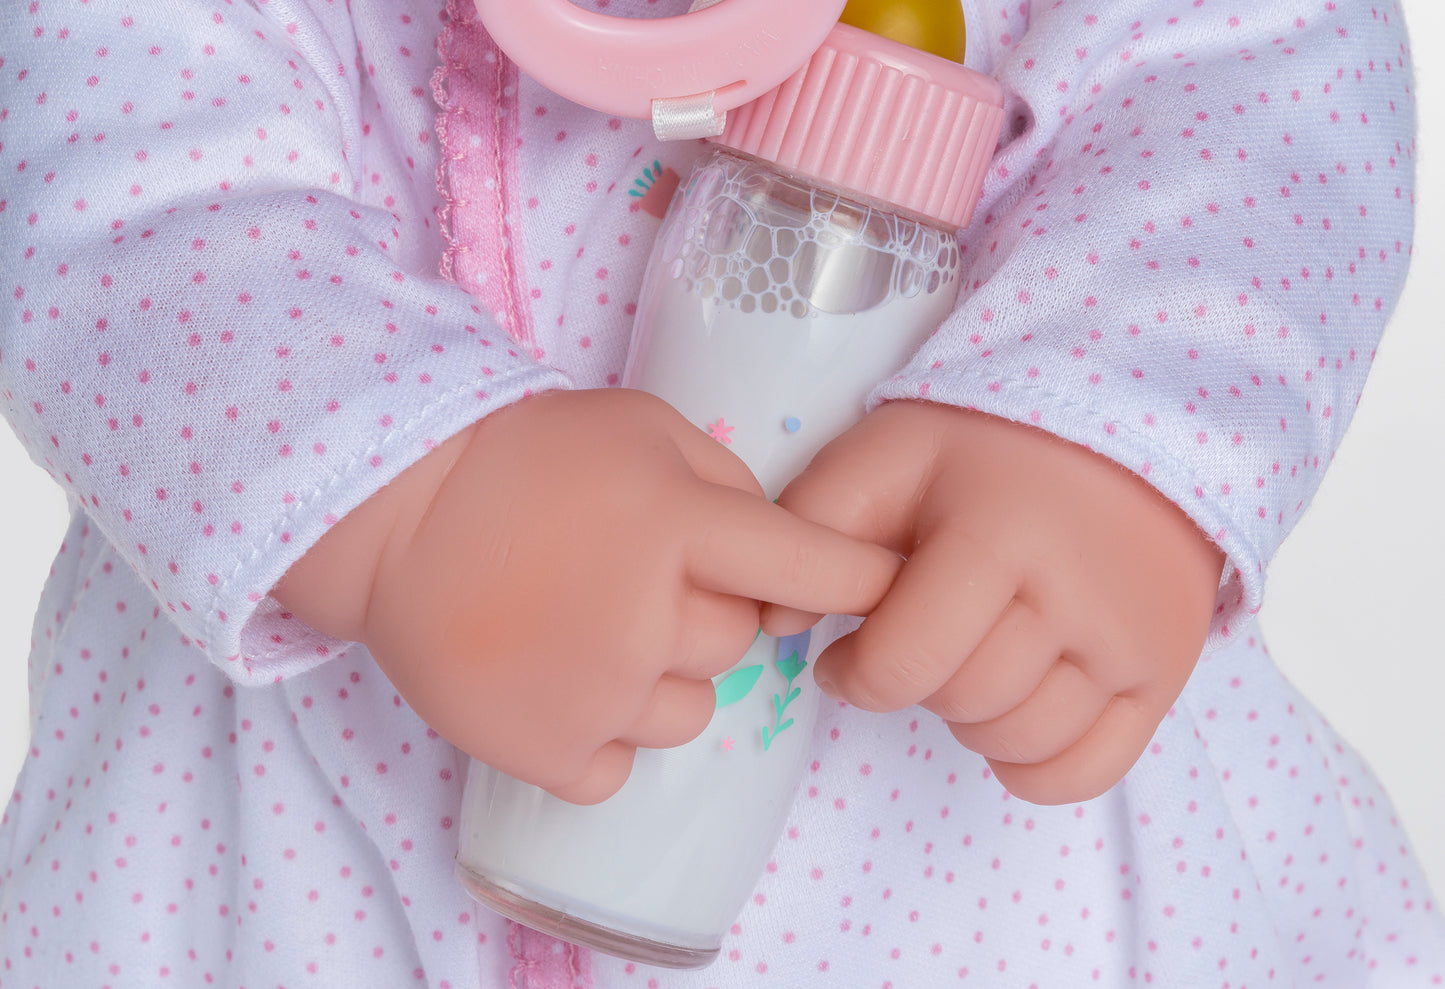 La Baby ® 20" Soft Body Baby Doll White/Pink Onesie w/ Pacifier & Magic Bottle.